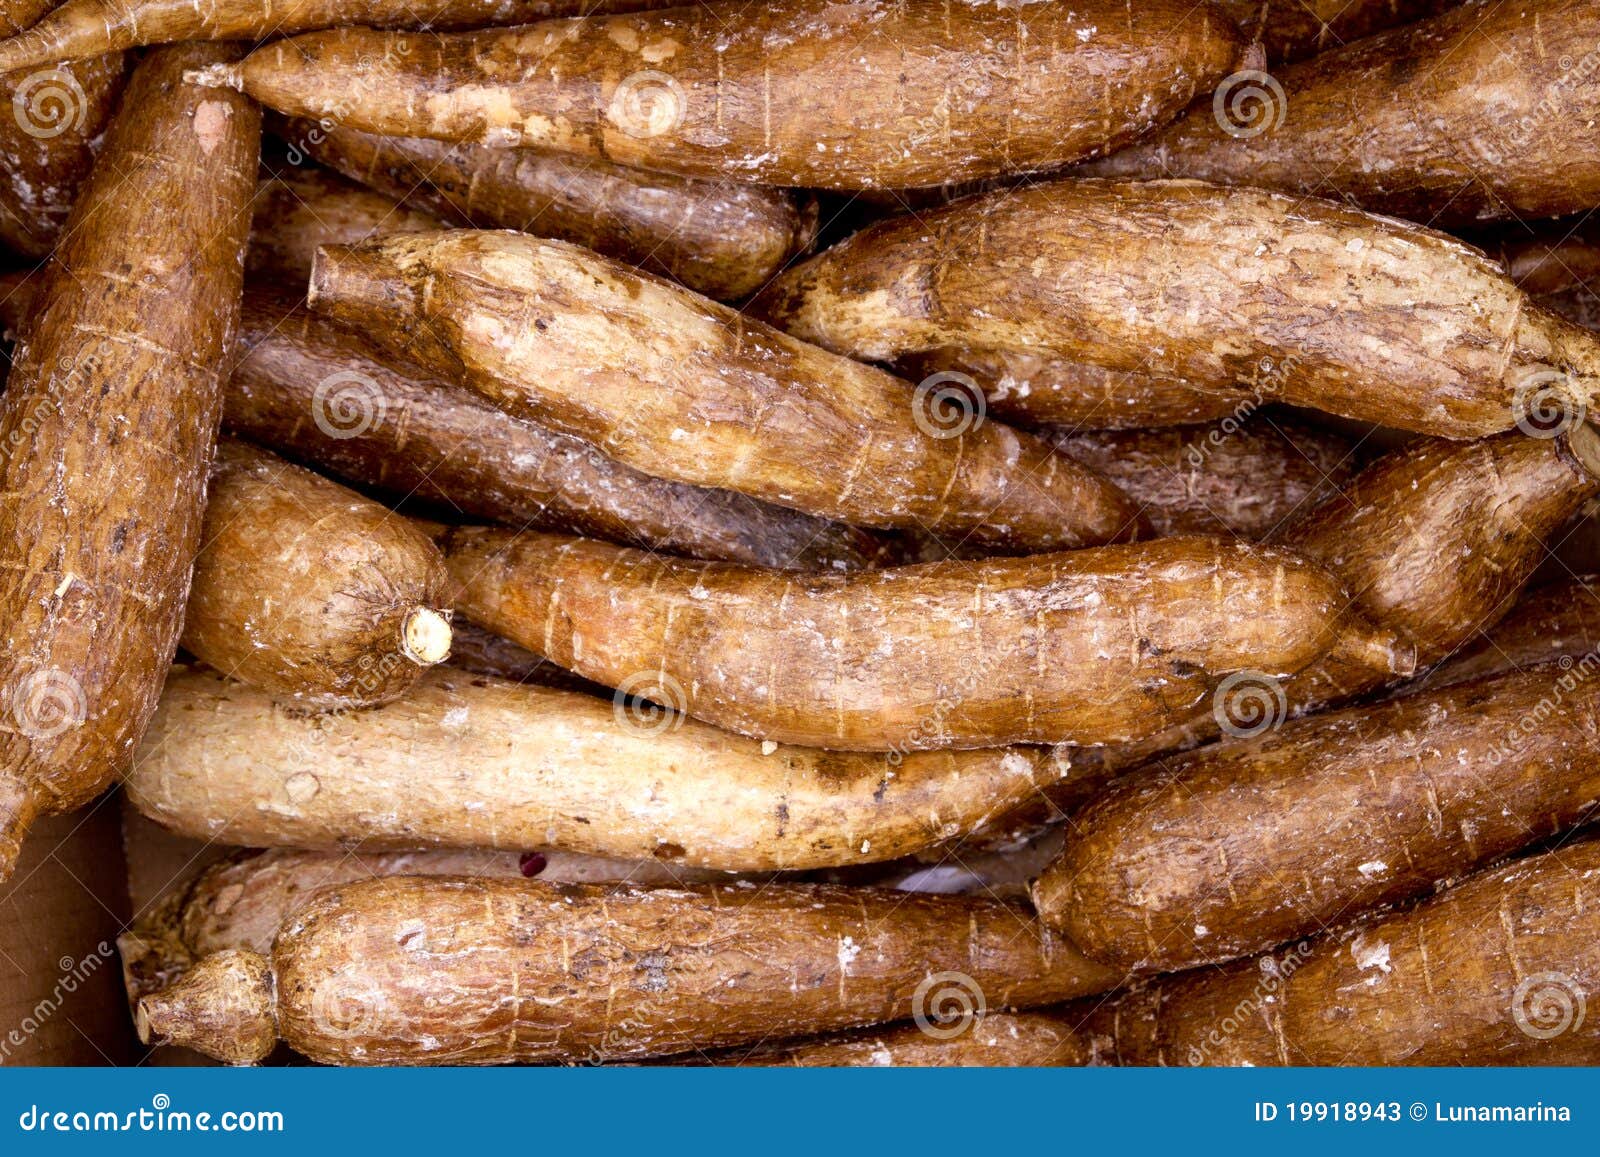 cassava yucca rhizomes vegatable food pattern